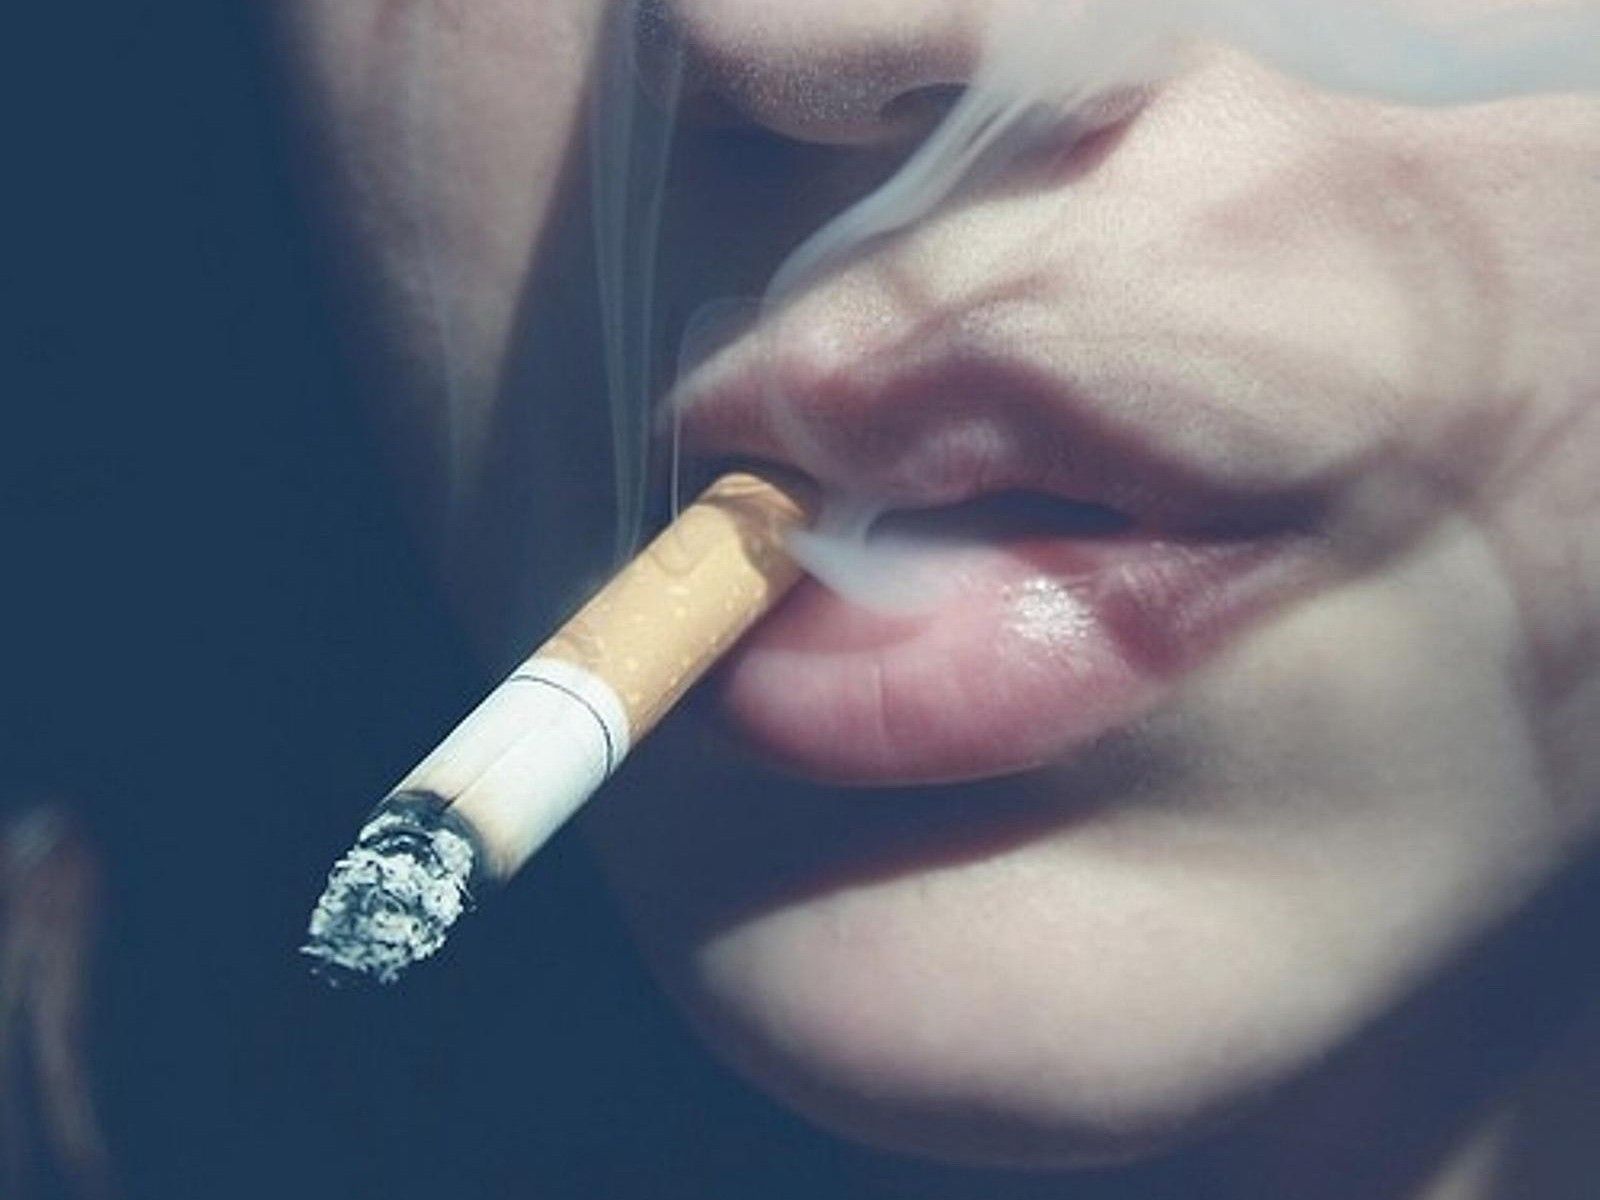 Cigarette cbt